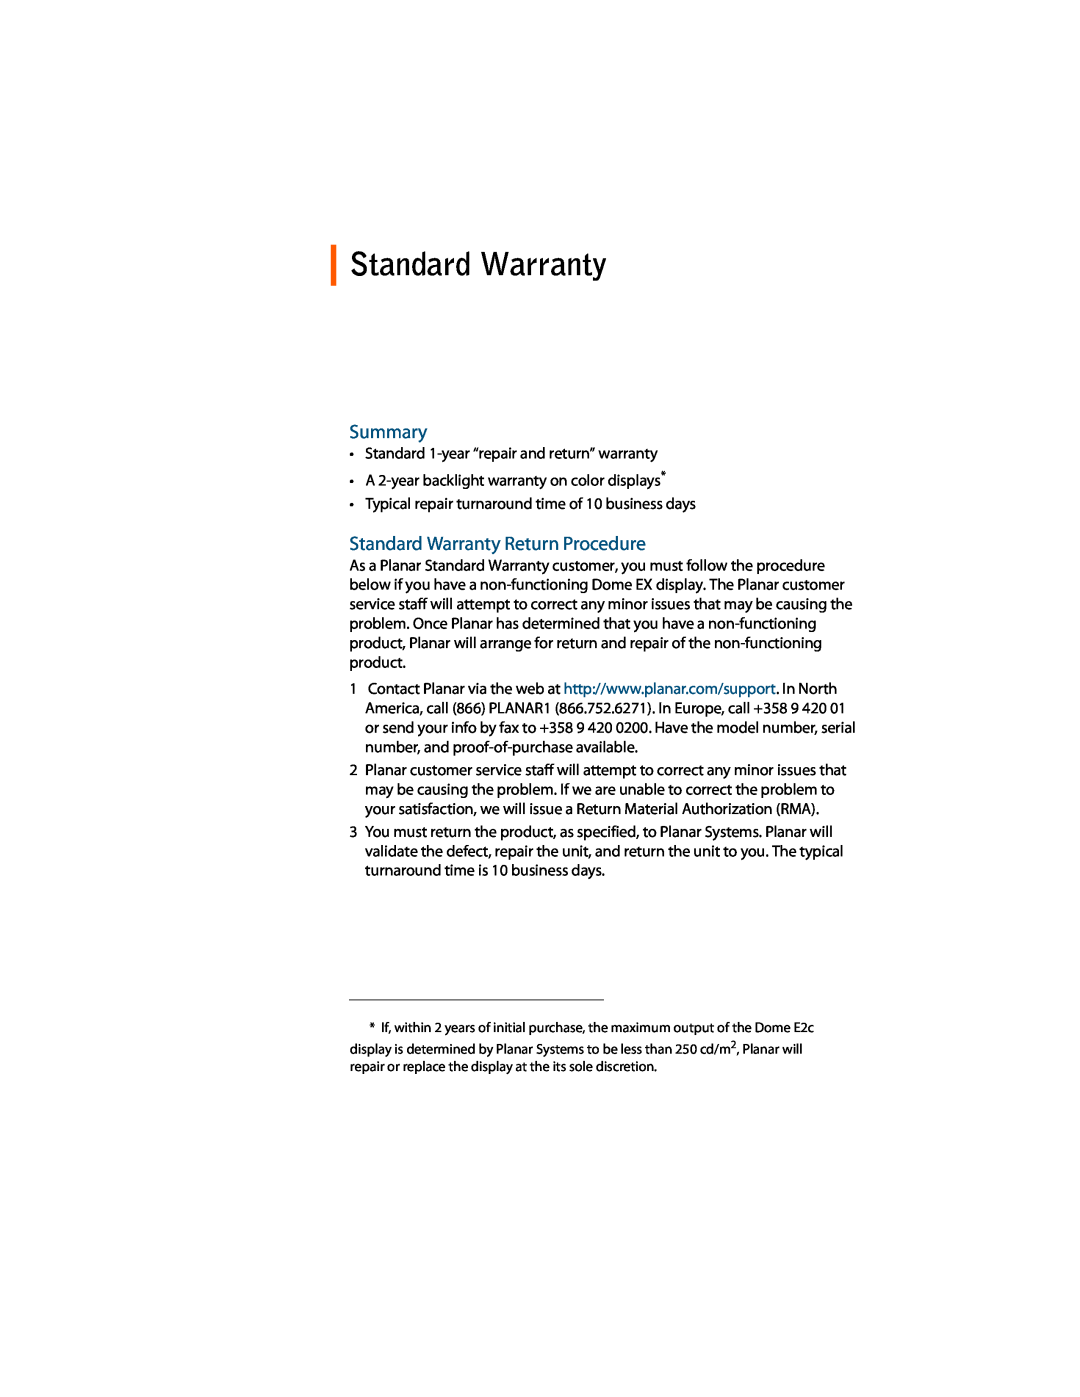 Planar E2c Display manual Summary, Standard Warranty Return Procedure 